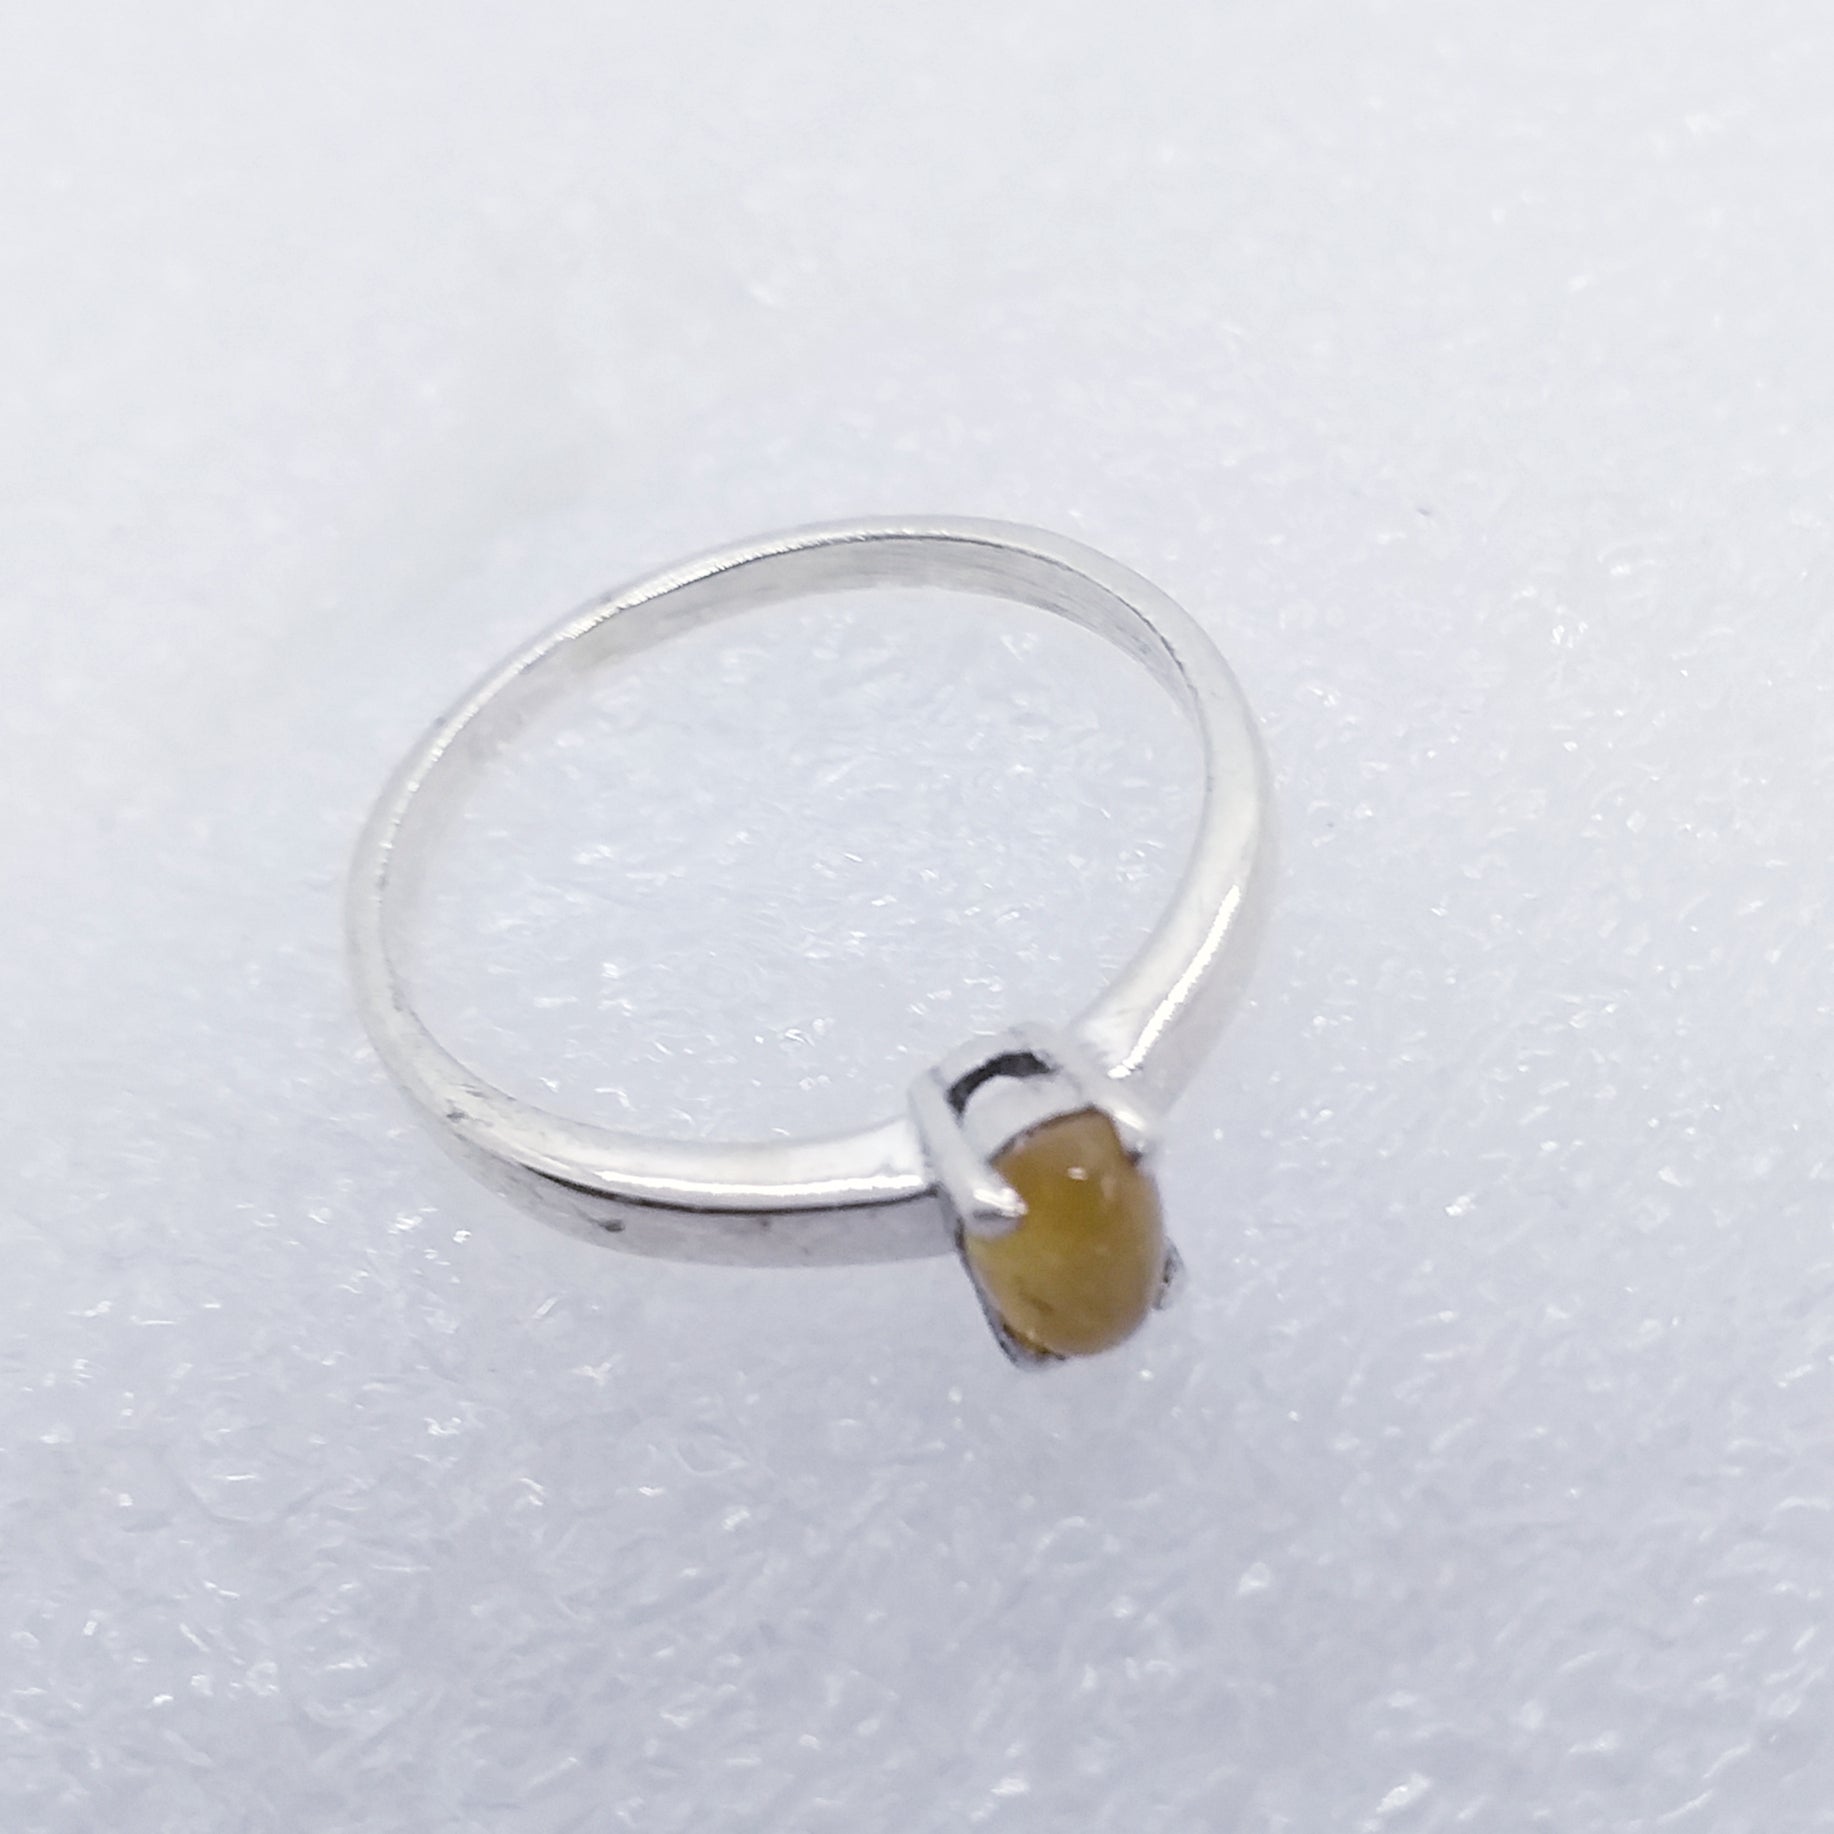 TURMALIN Ring gelb Tsilaisit Ring Gr. 18 925 Silber Rohstein RARITÄT